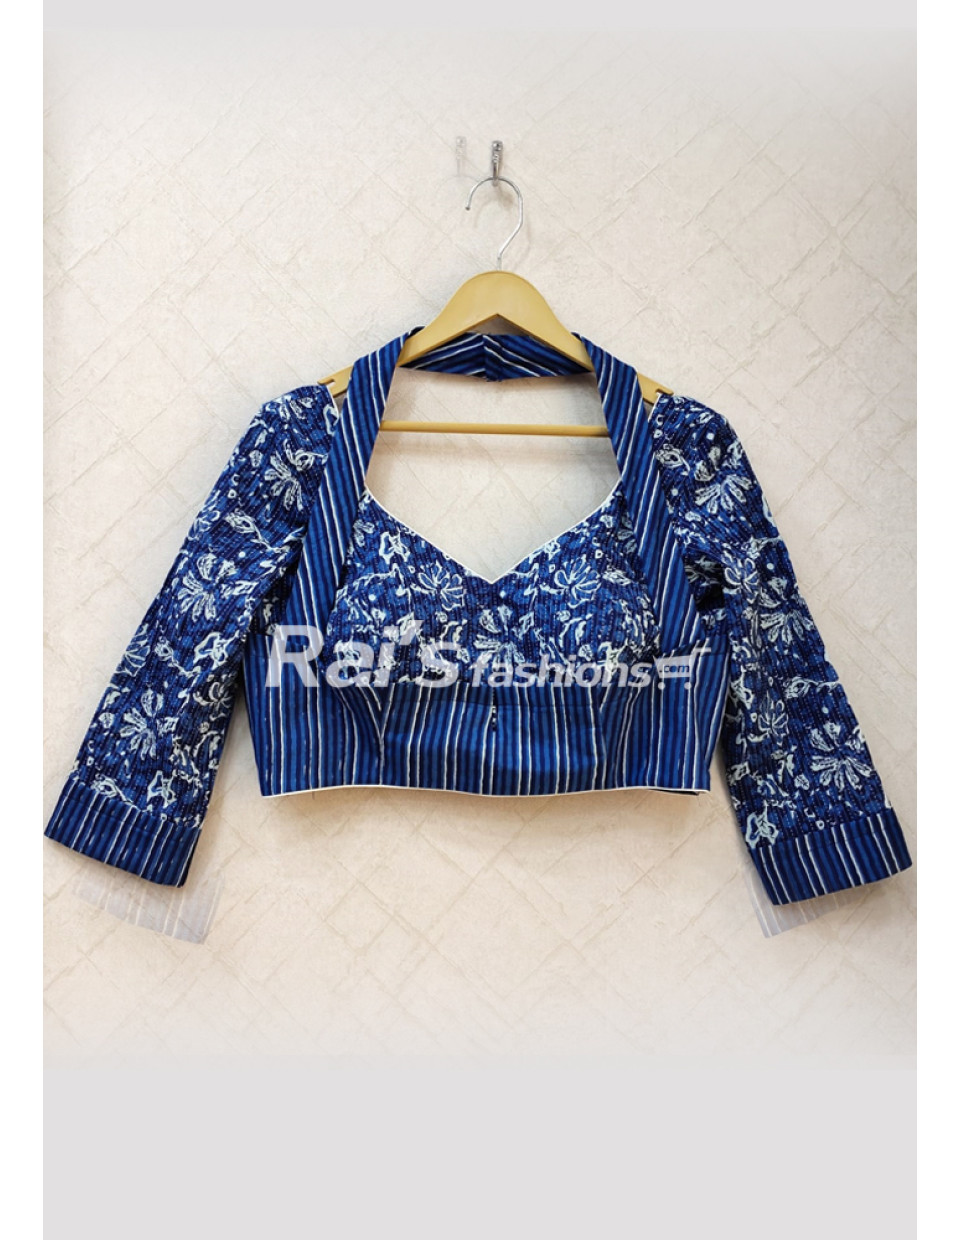 Navy Blue Cotton Printed Jacket Pattern Neck Belt Designer Blouse (RAI0123)